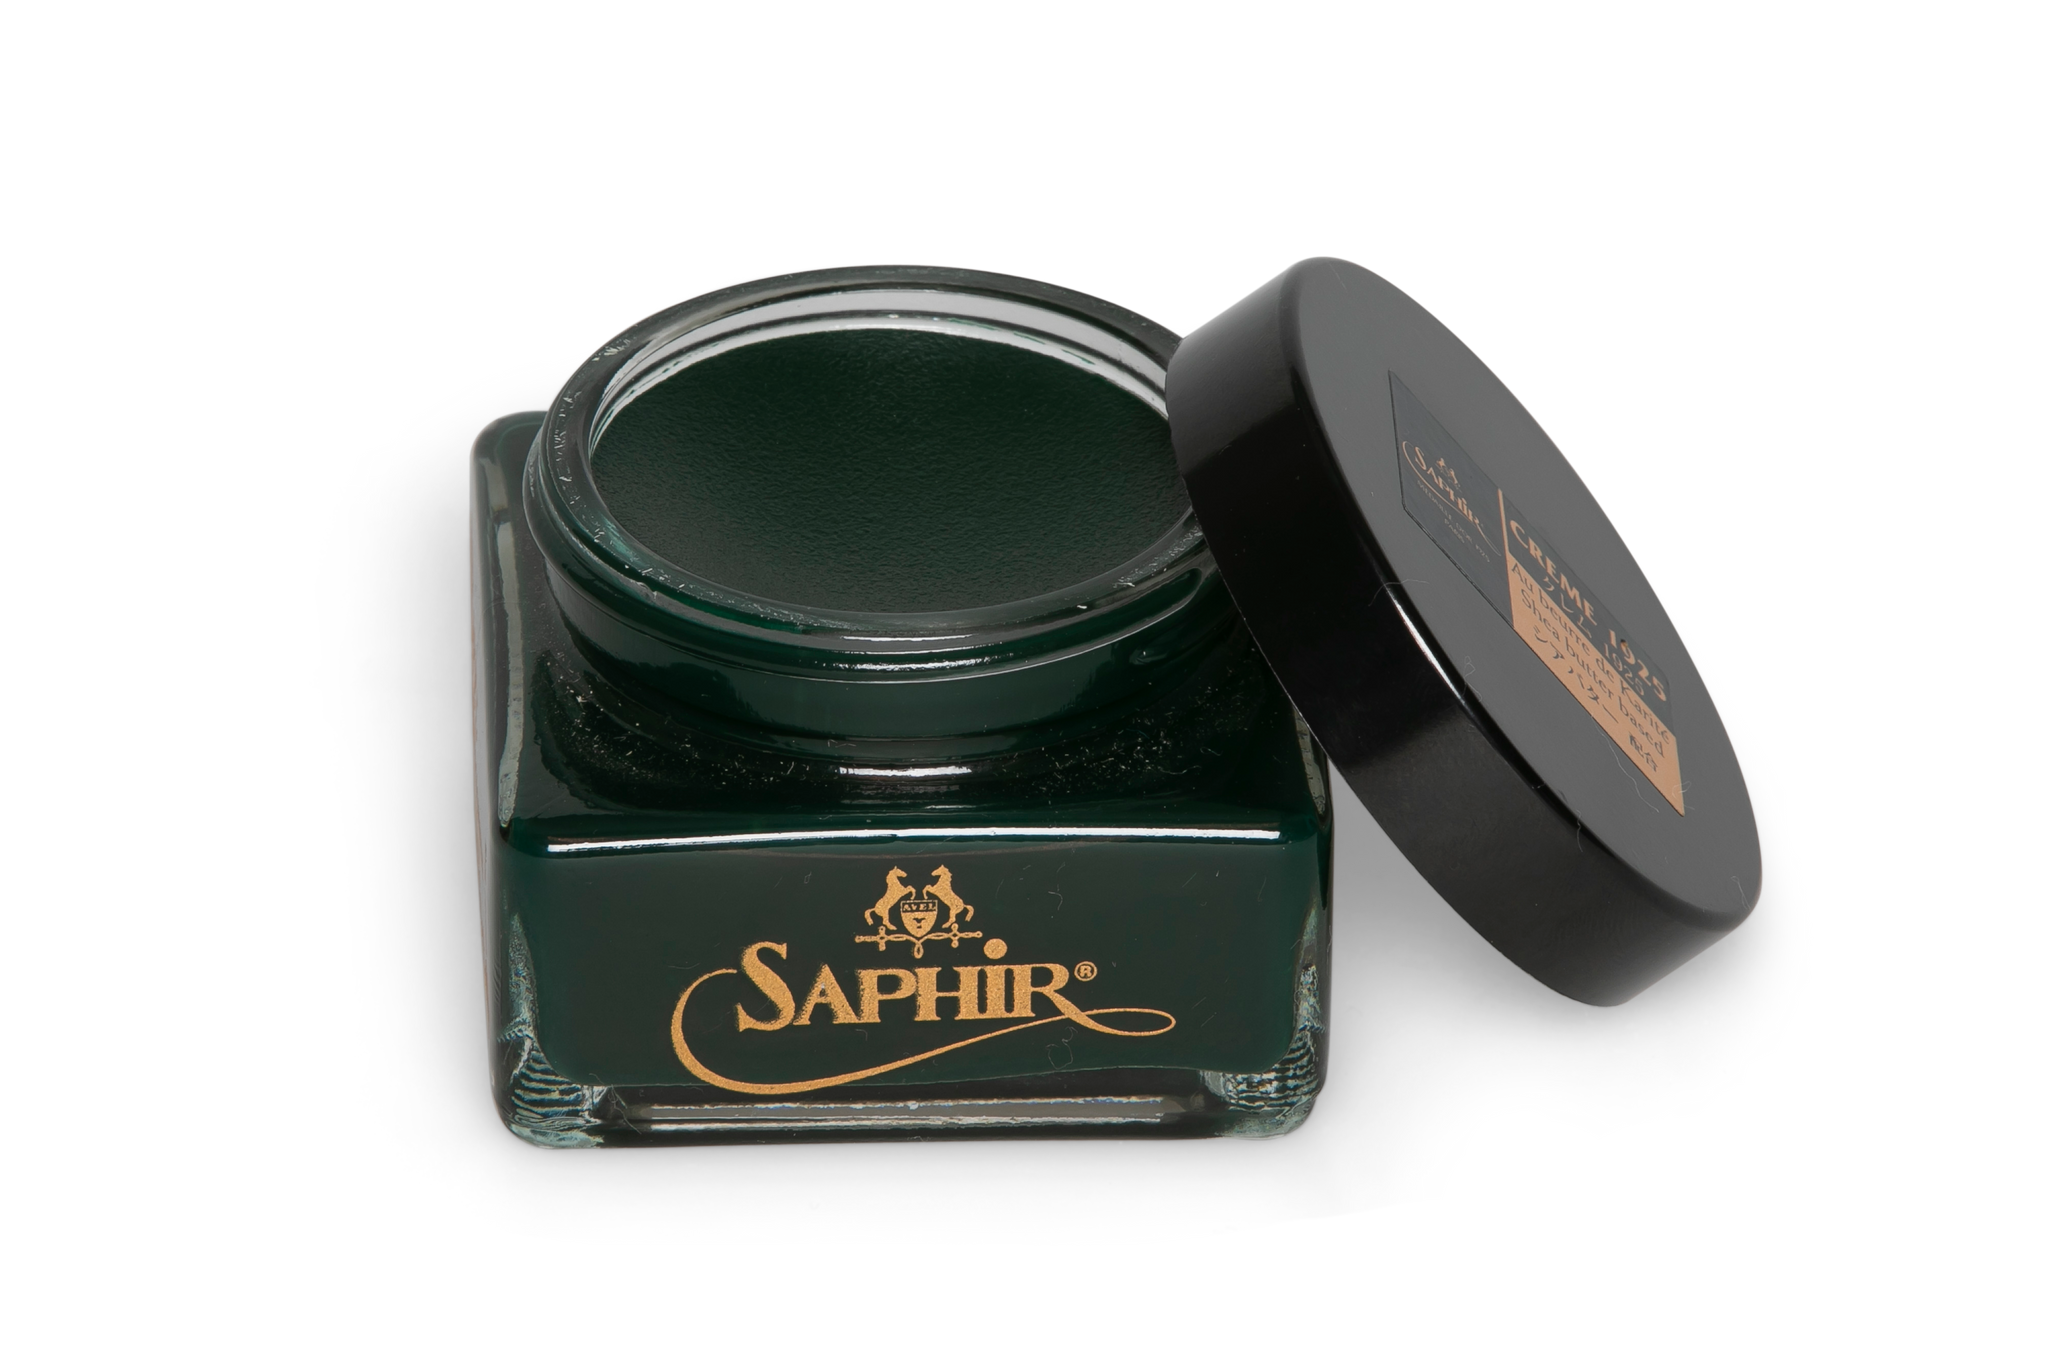 Saphir Pommadier cream in Dark Green colour for premium shoe care